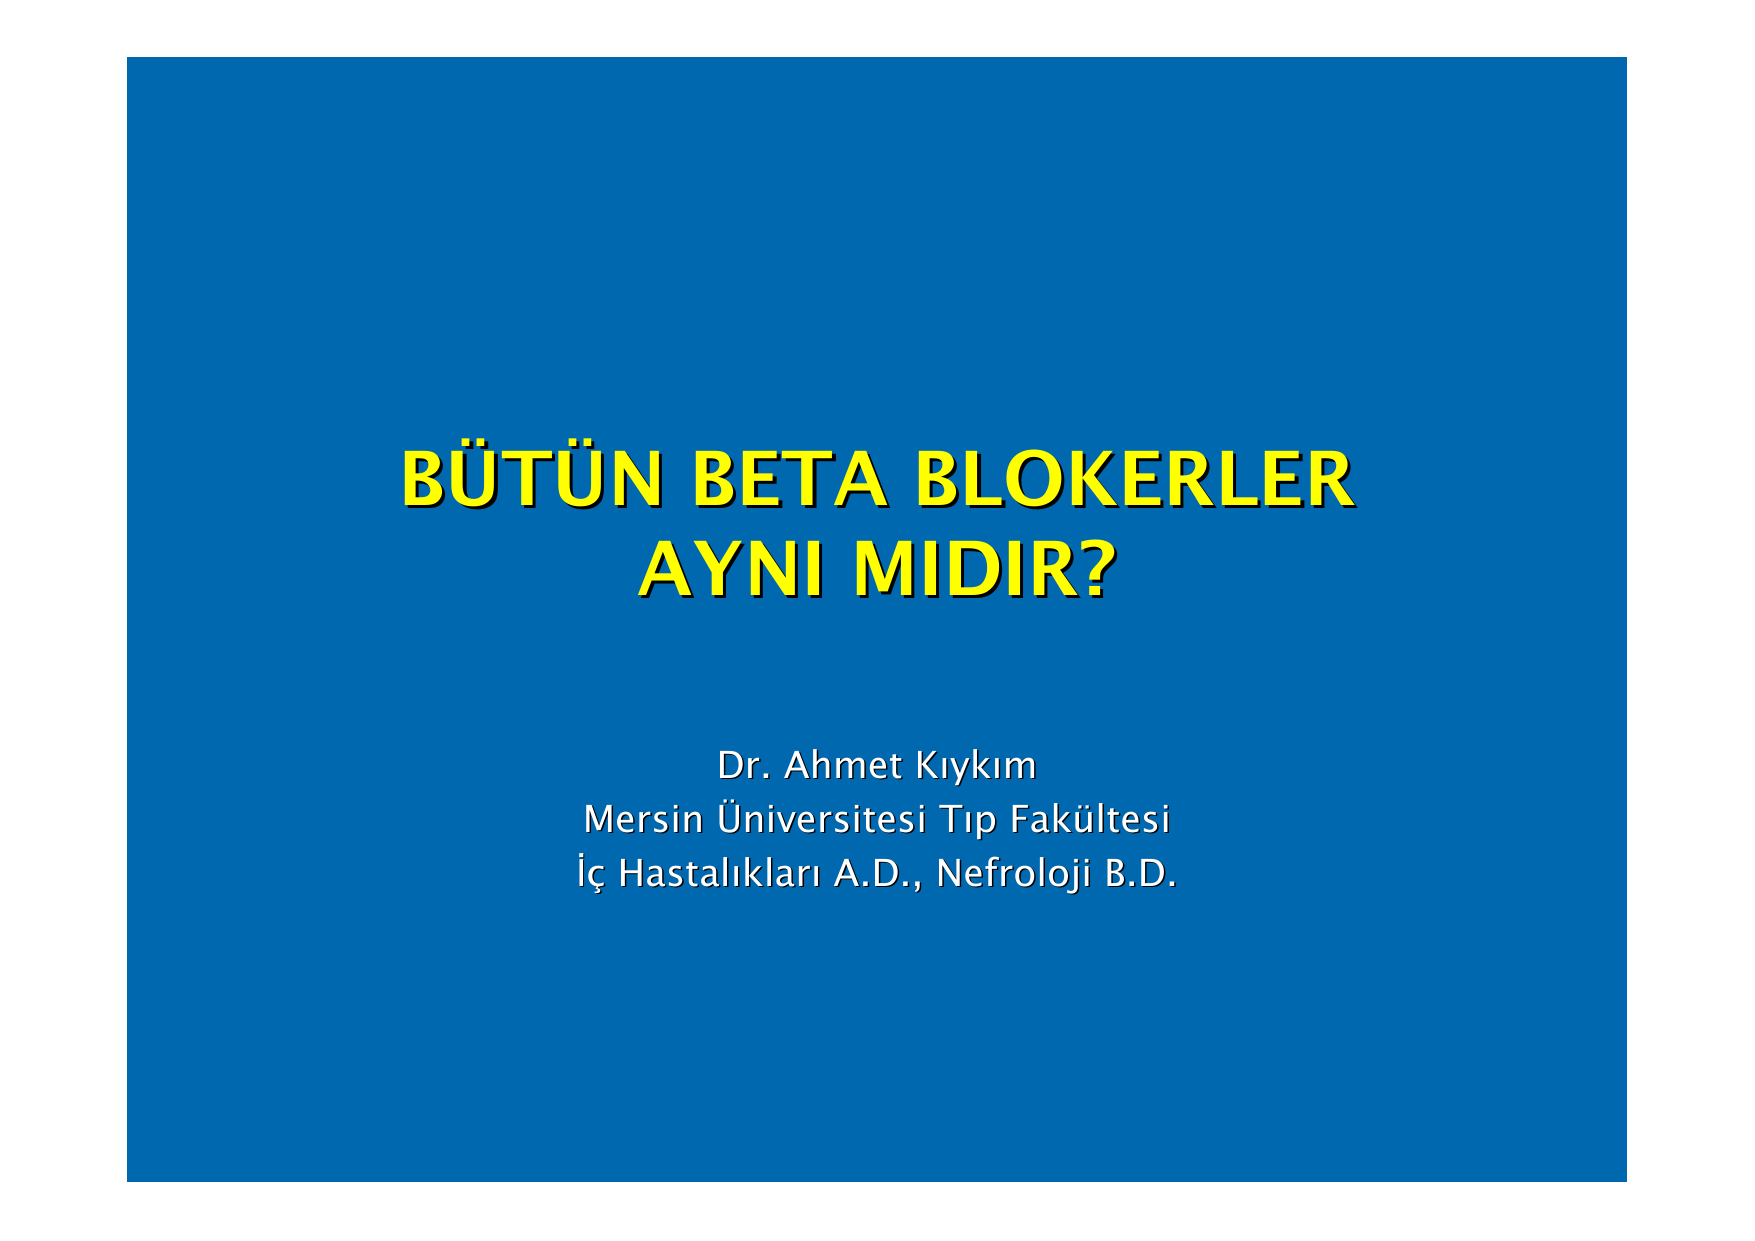 Turkiye Klinikleri Journal of Internal Medical Sciences